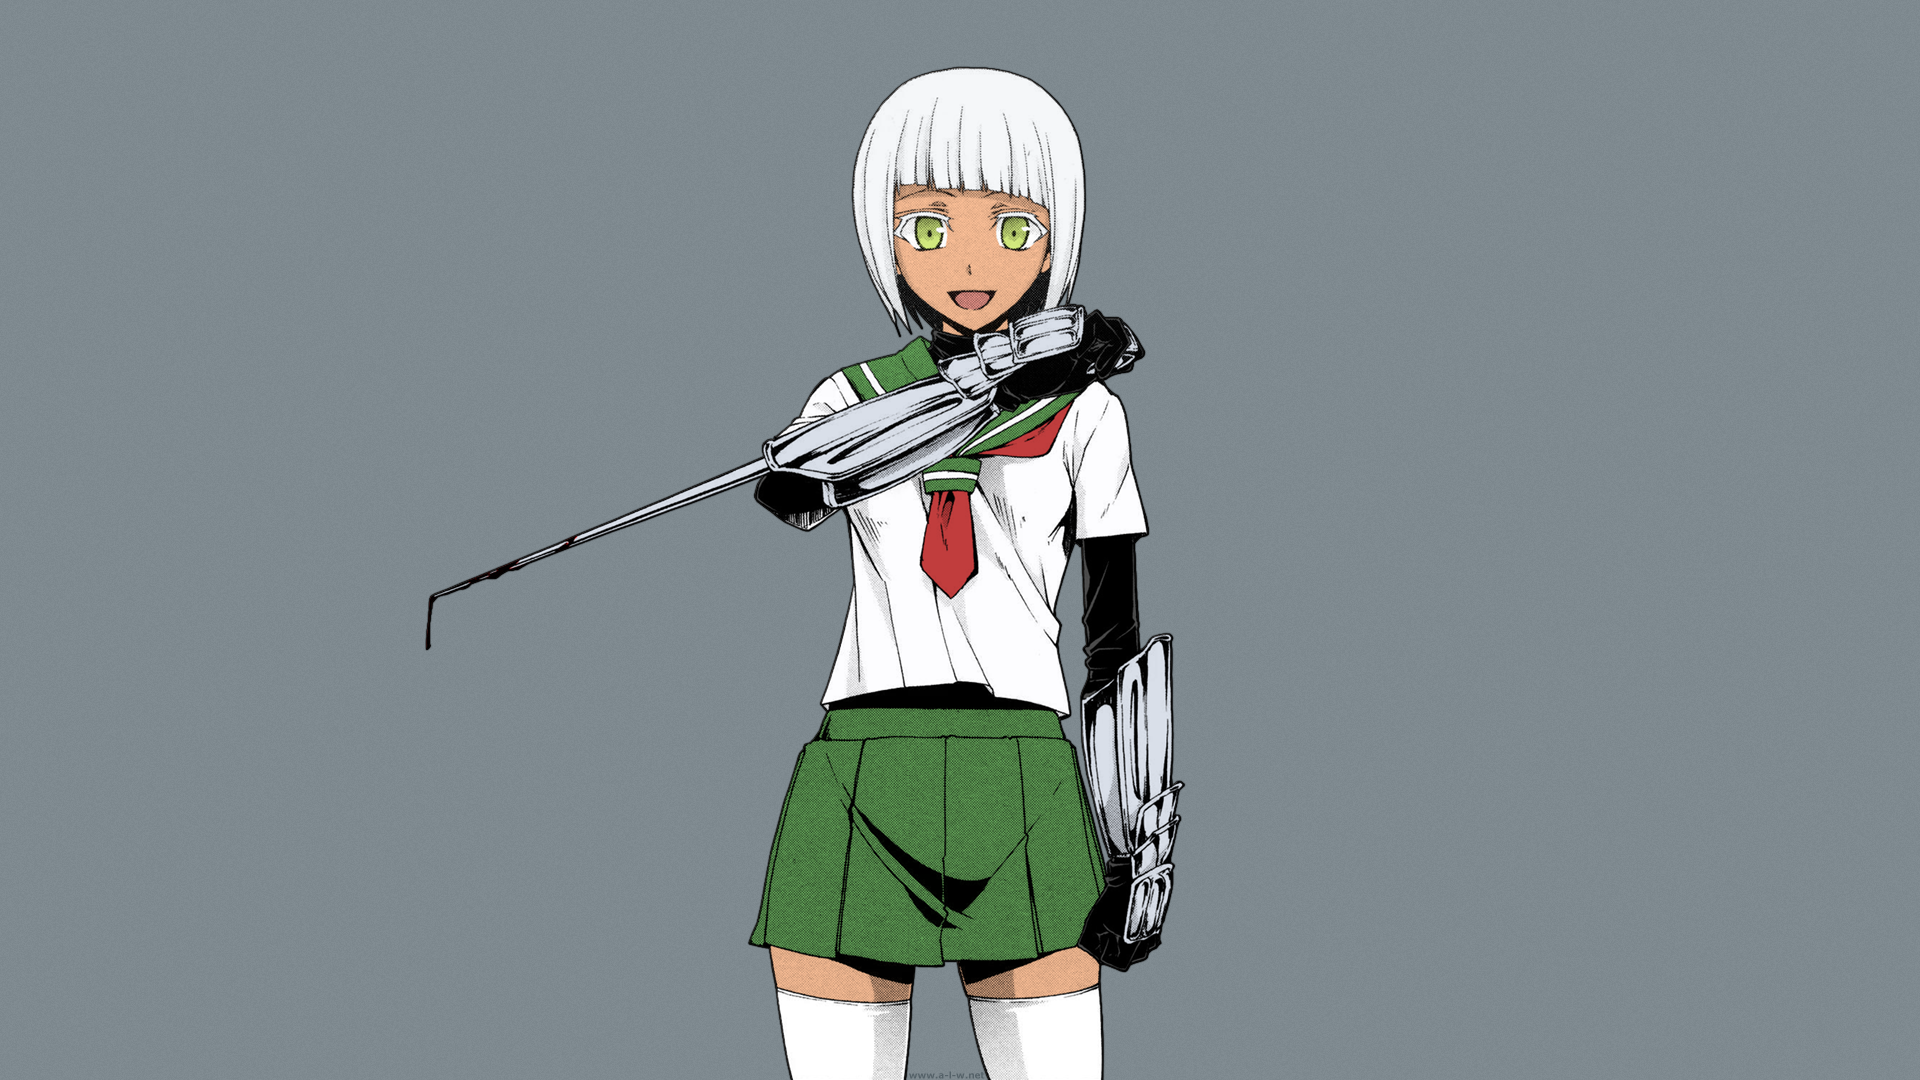 Arachnid Ifuji Shinsen Dinoponera Short Hair White Hair School Uniform Green Eyes Smiling Anime Mang 1920x1080